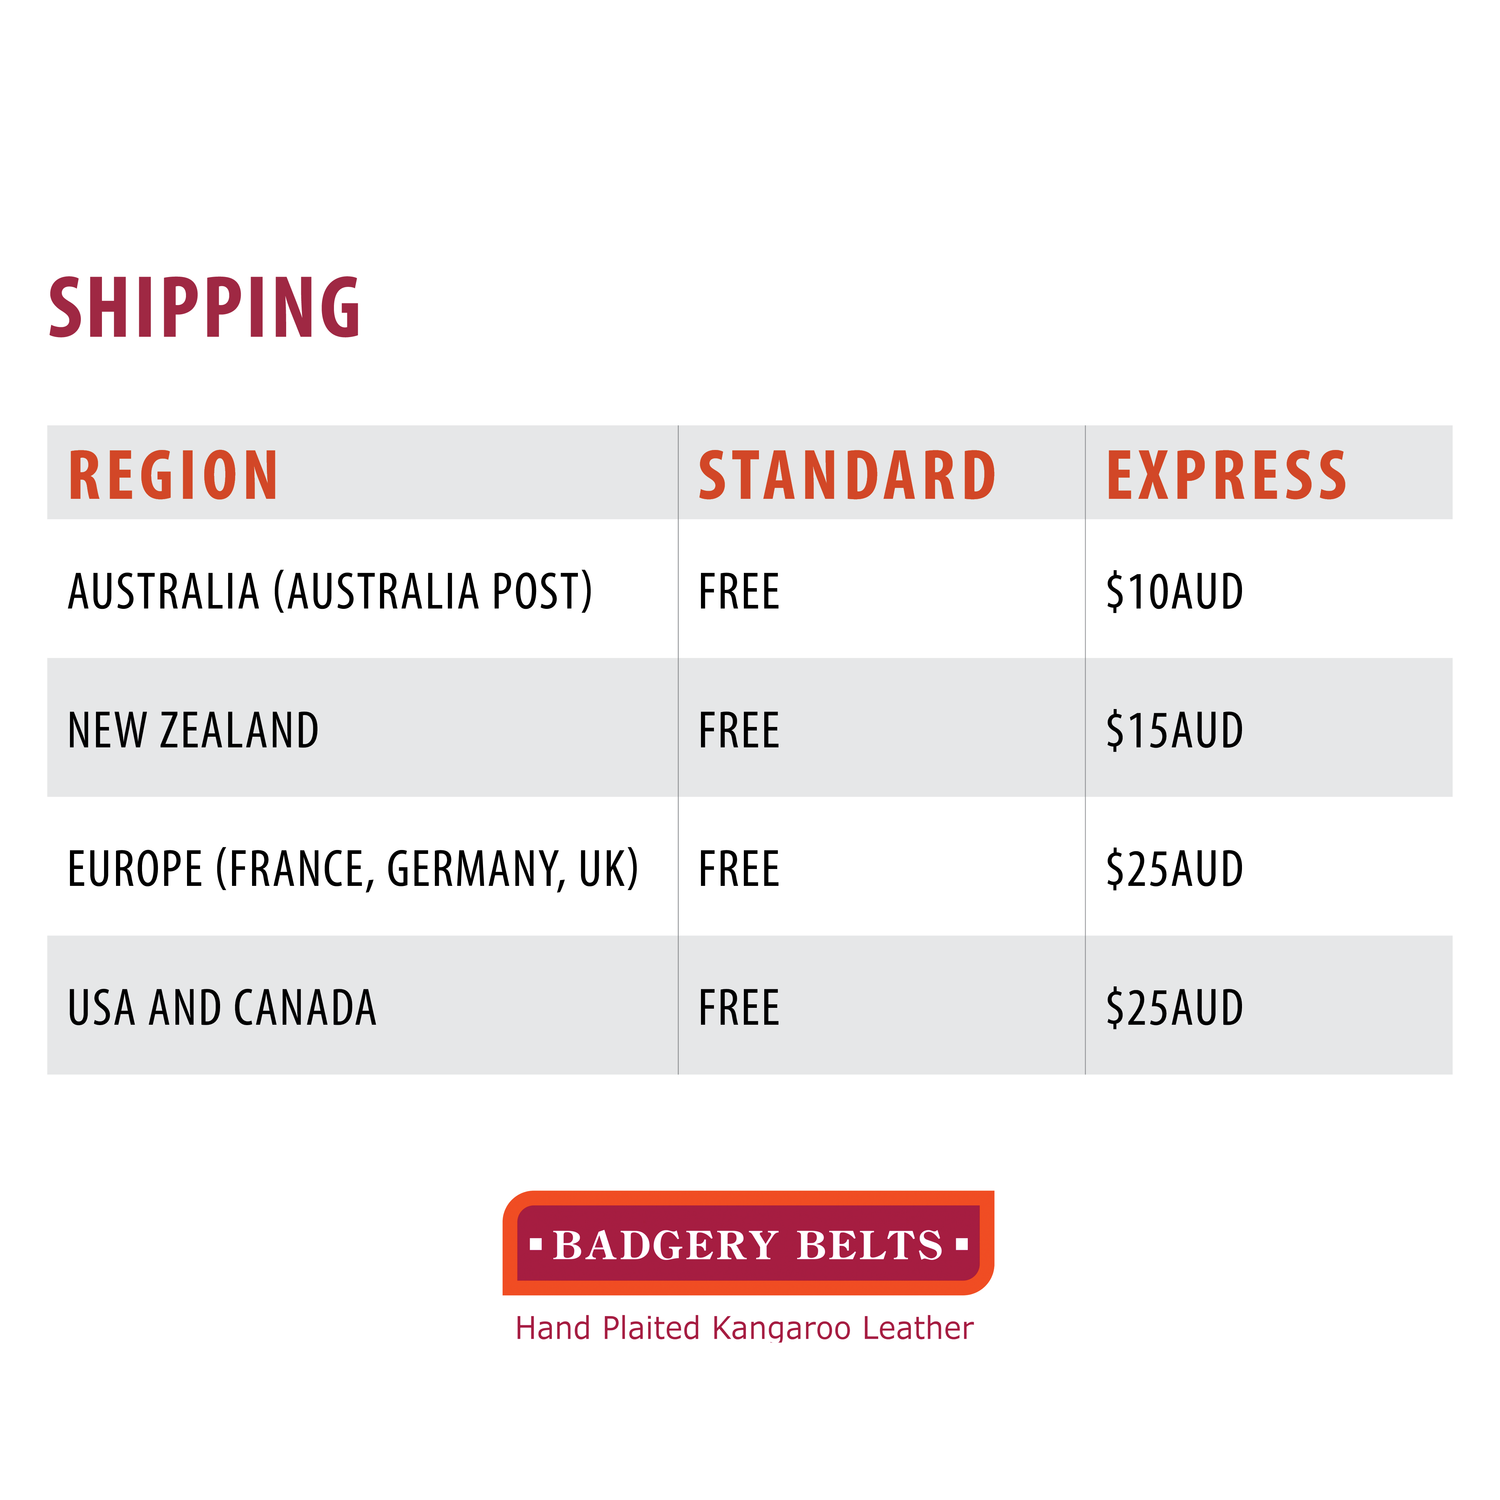 Badgery Belts Free Shipping world wide table. Australia: Free, Newzeland: Free, Europe: Free, USA + Canada: Free